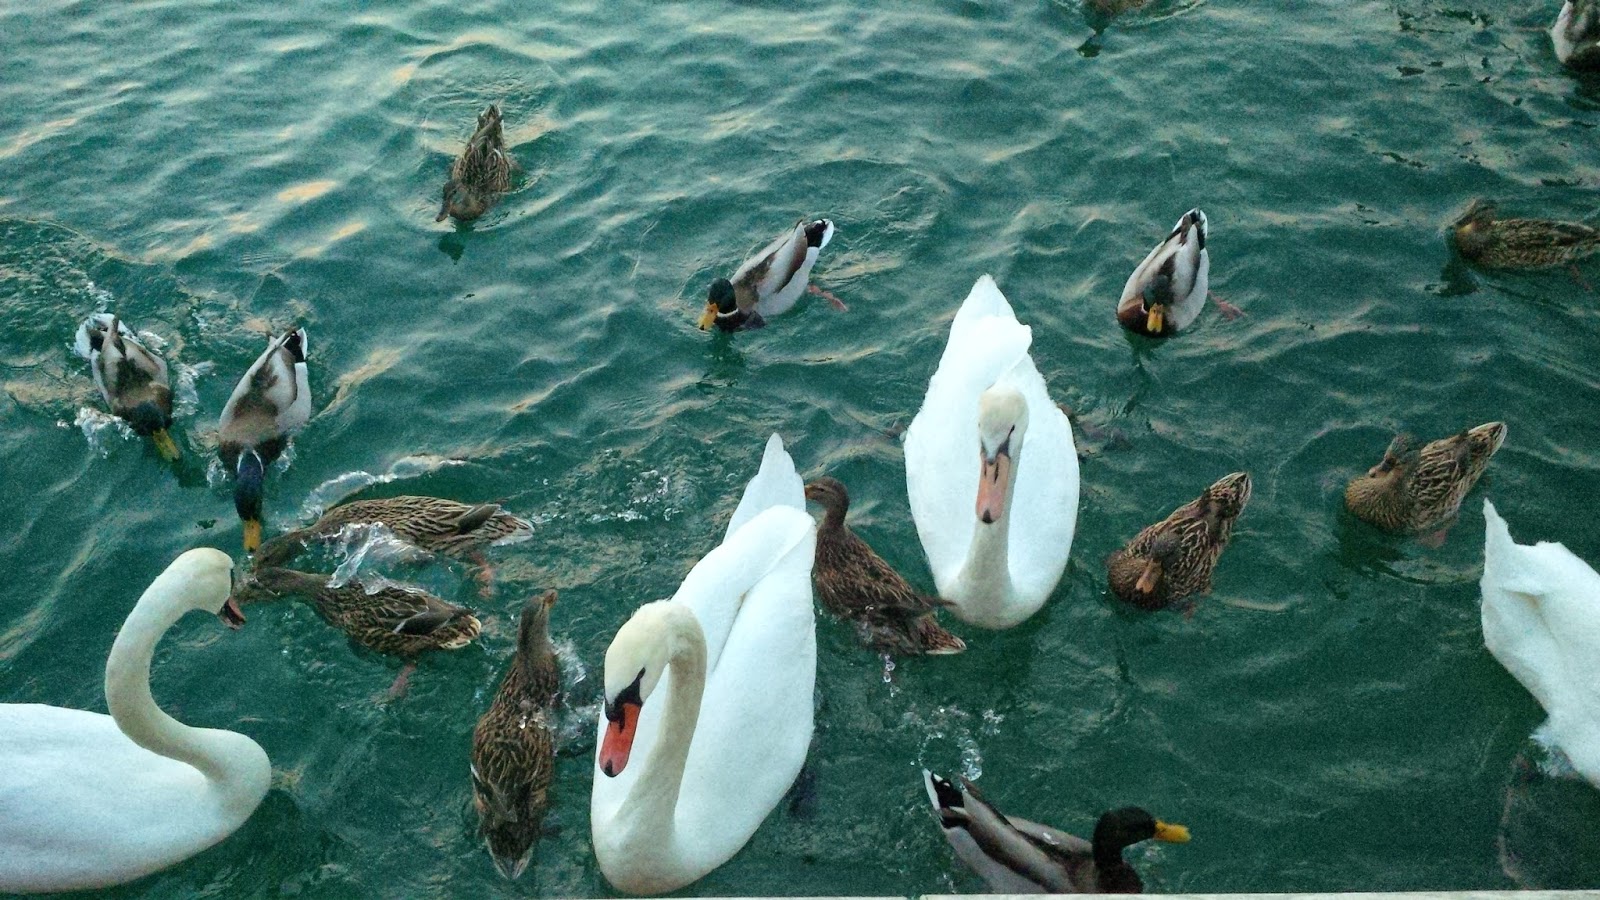 Feeding the swans in Lazise